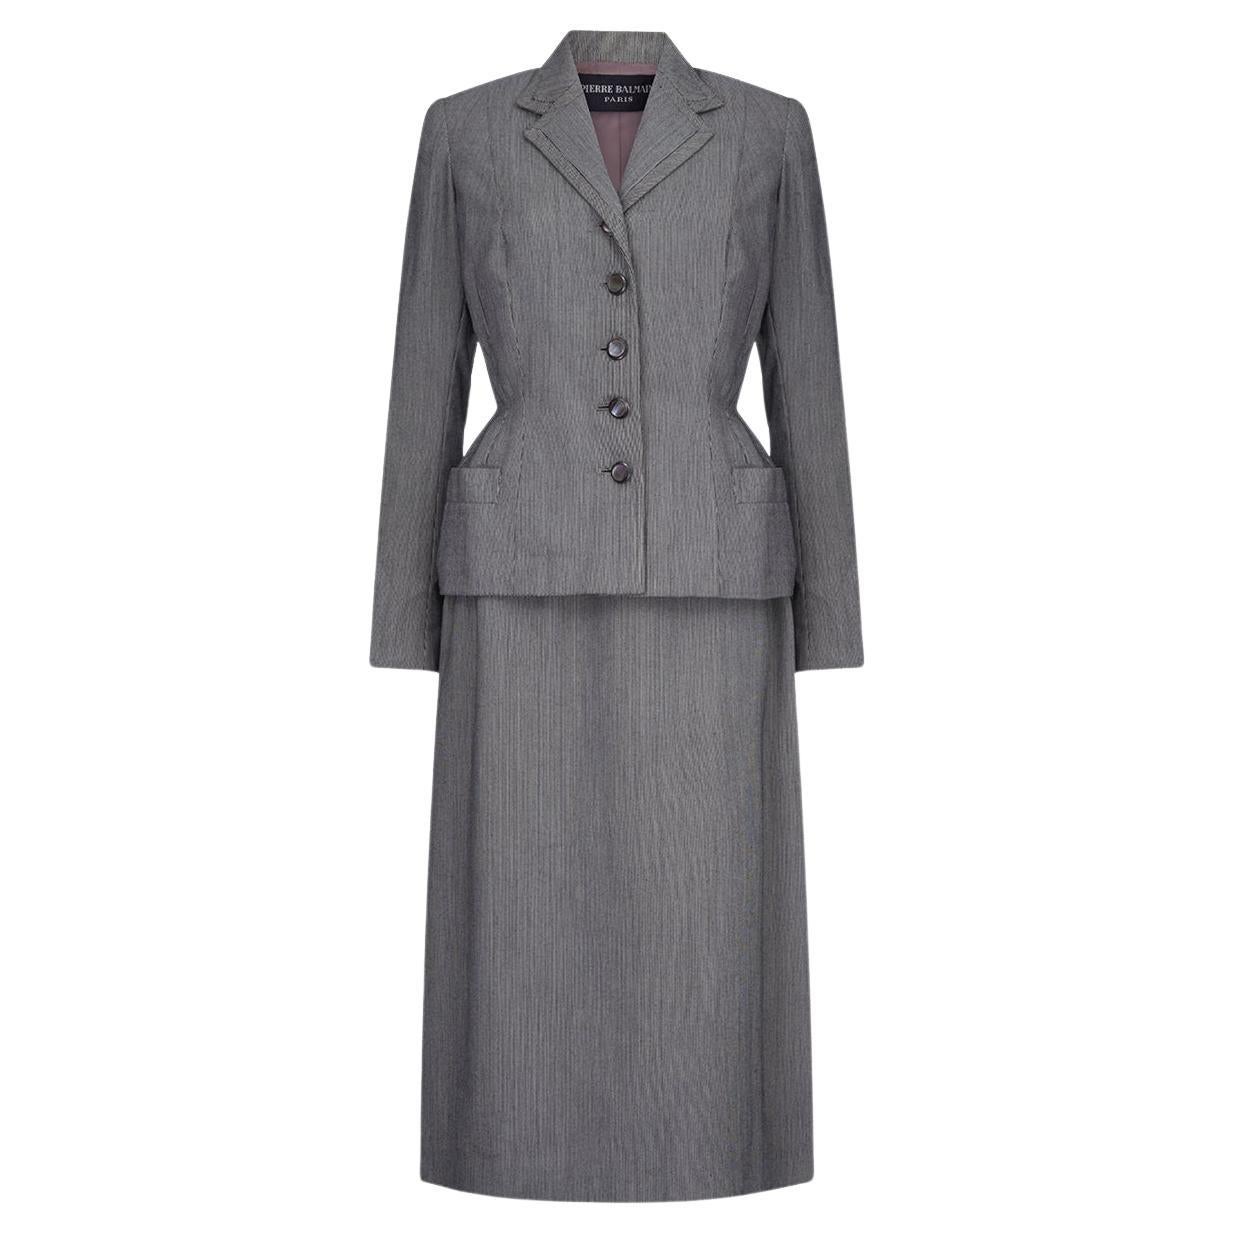 1949 Documented Pierre Balmain Haute Couture Grey Bar Jacket Suit For Sale